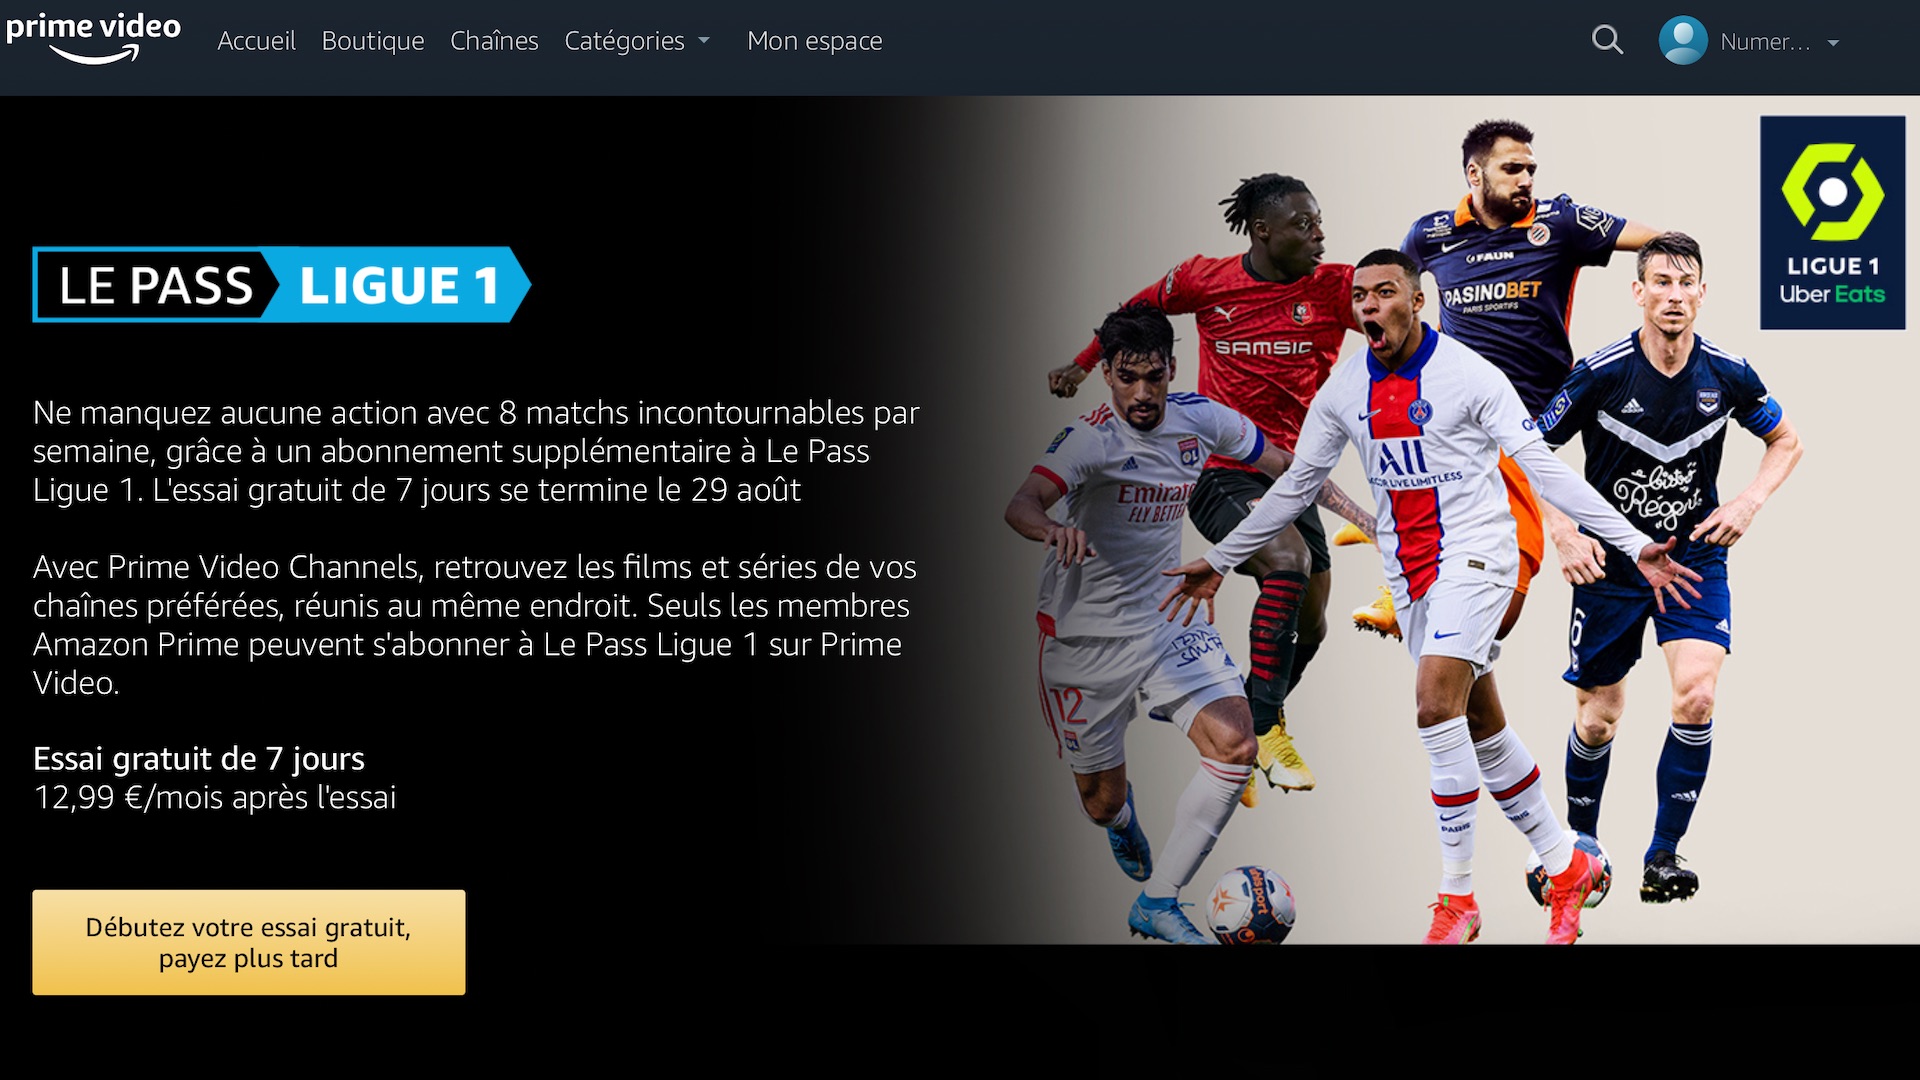 regarder ligue 1 gratuitement soldes magasin online off 69